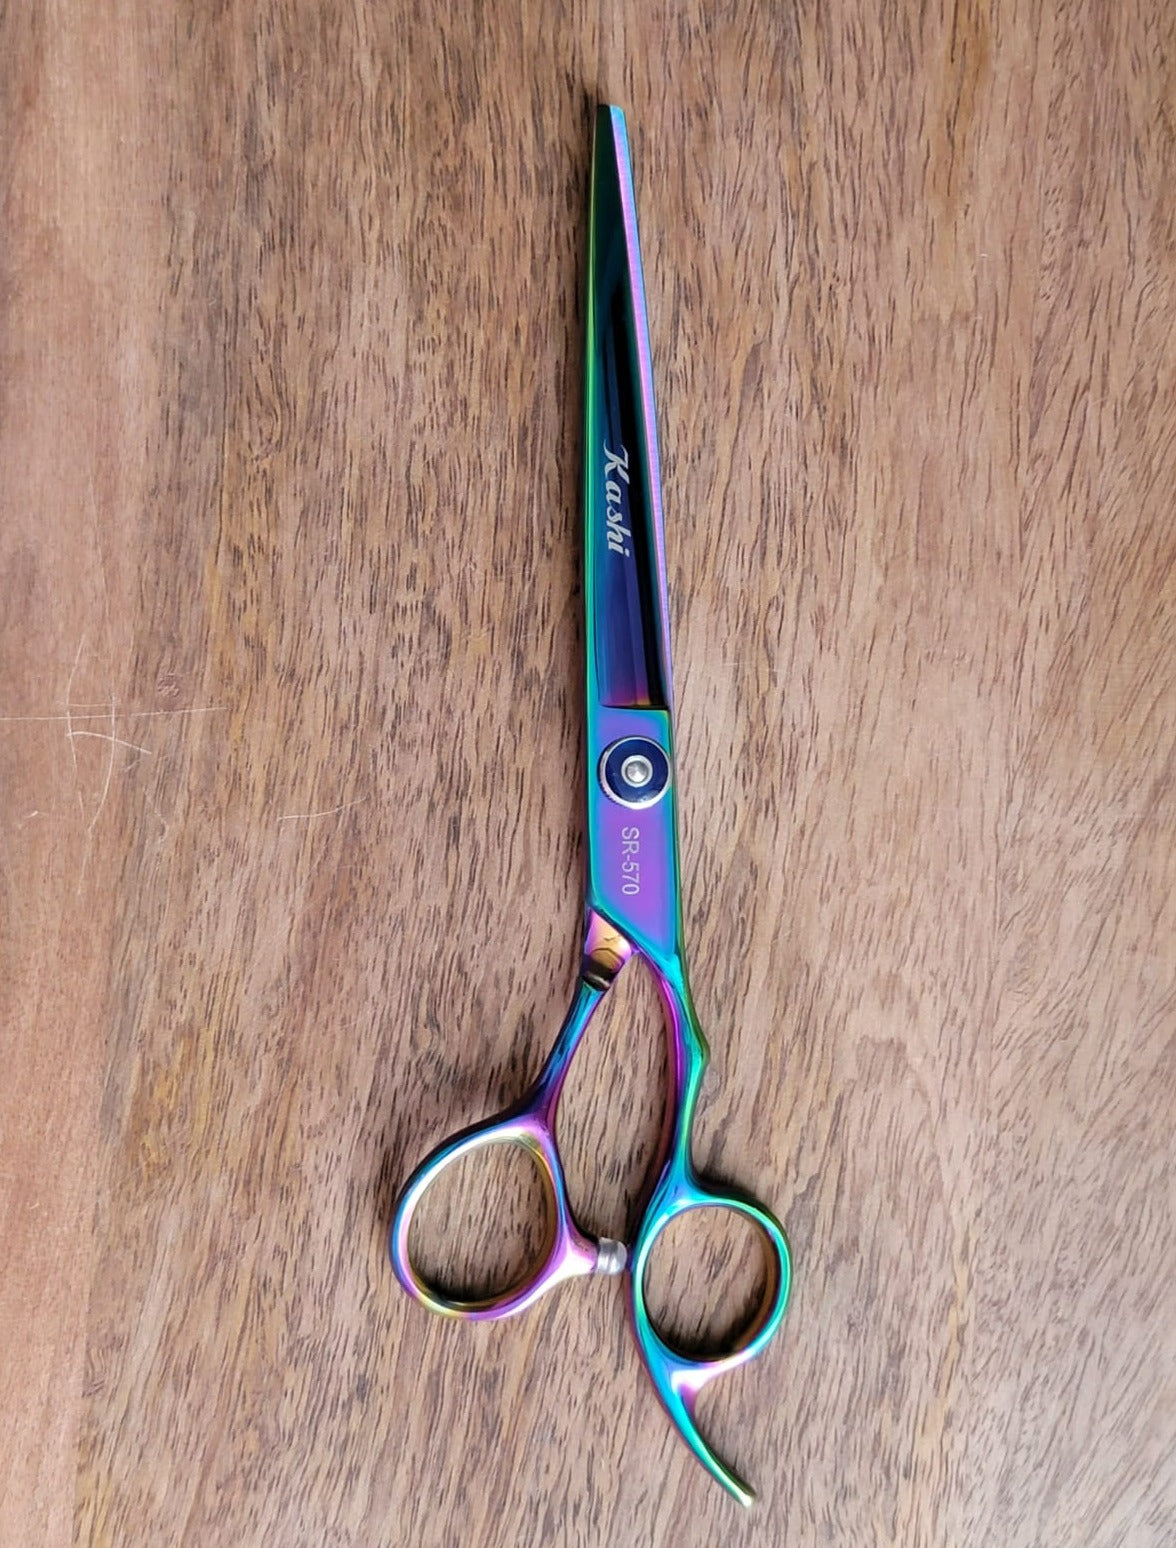 Kashi Professional Cutting Hair Shears SR-570 Rainbow Color - Japanese Steel 7 inch